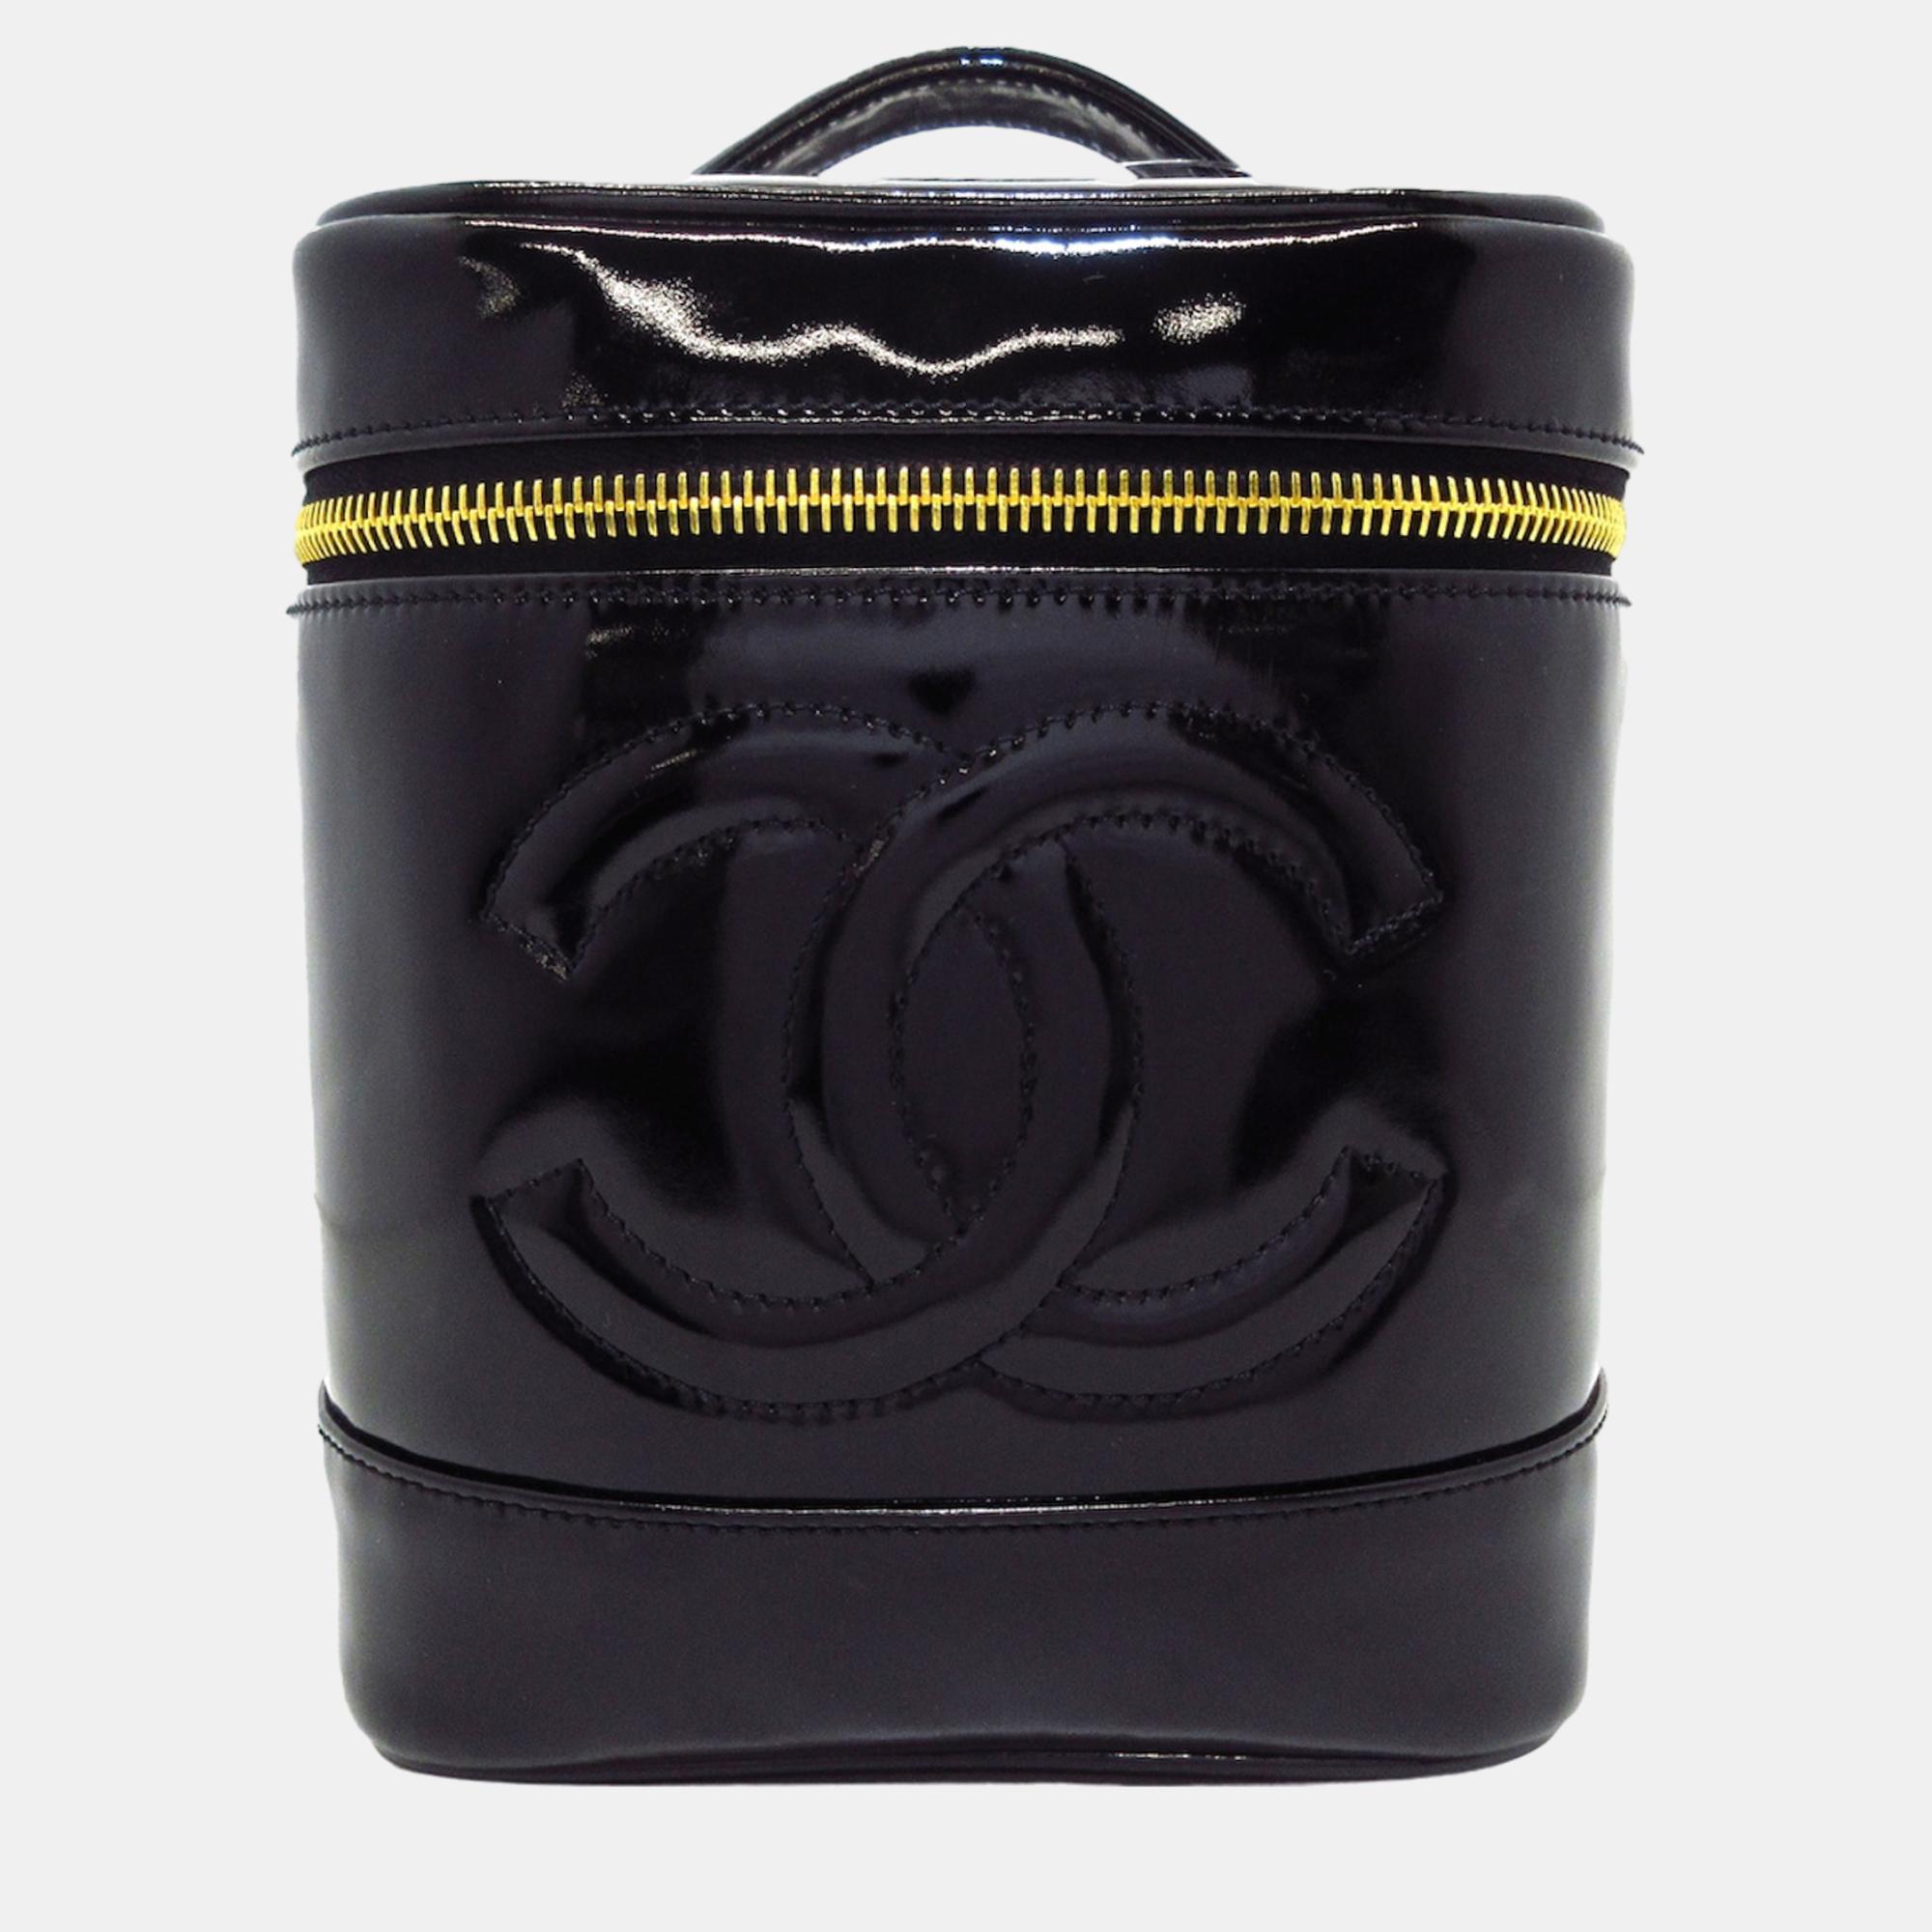 Chanel black cc vanity bag